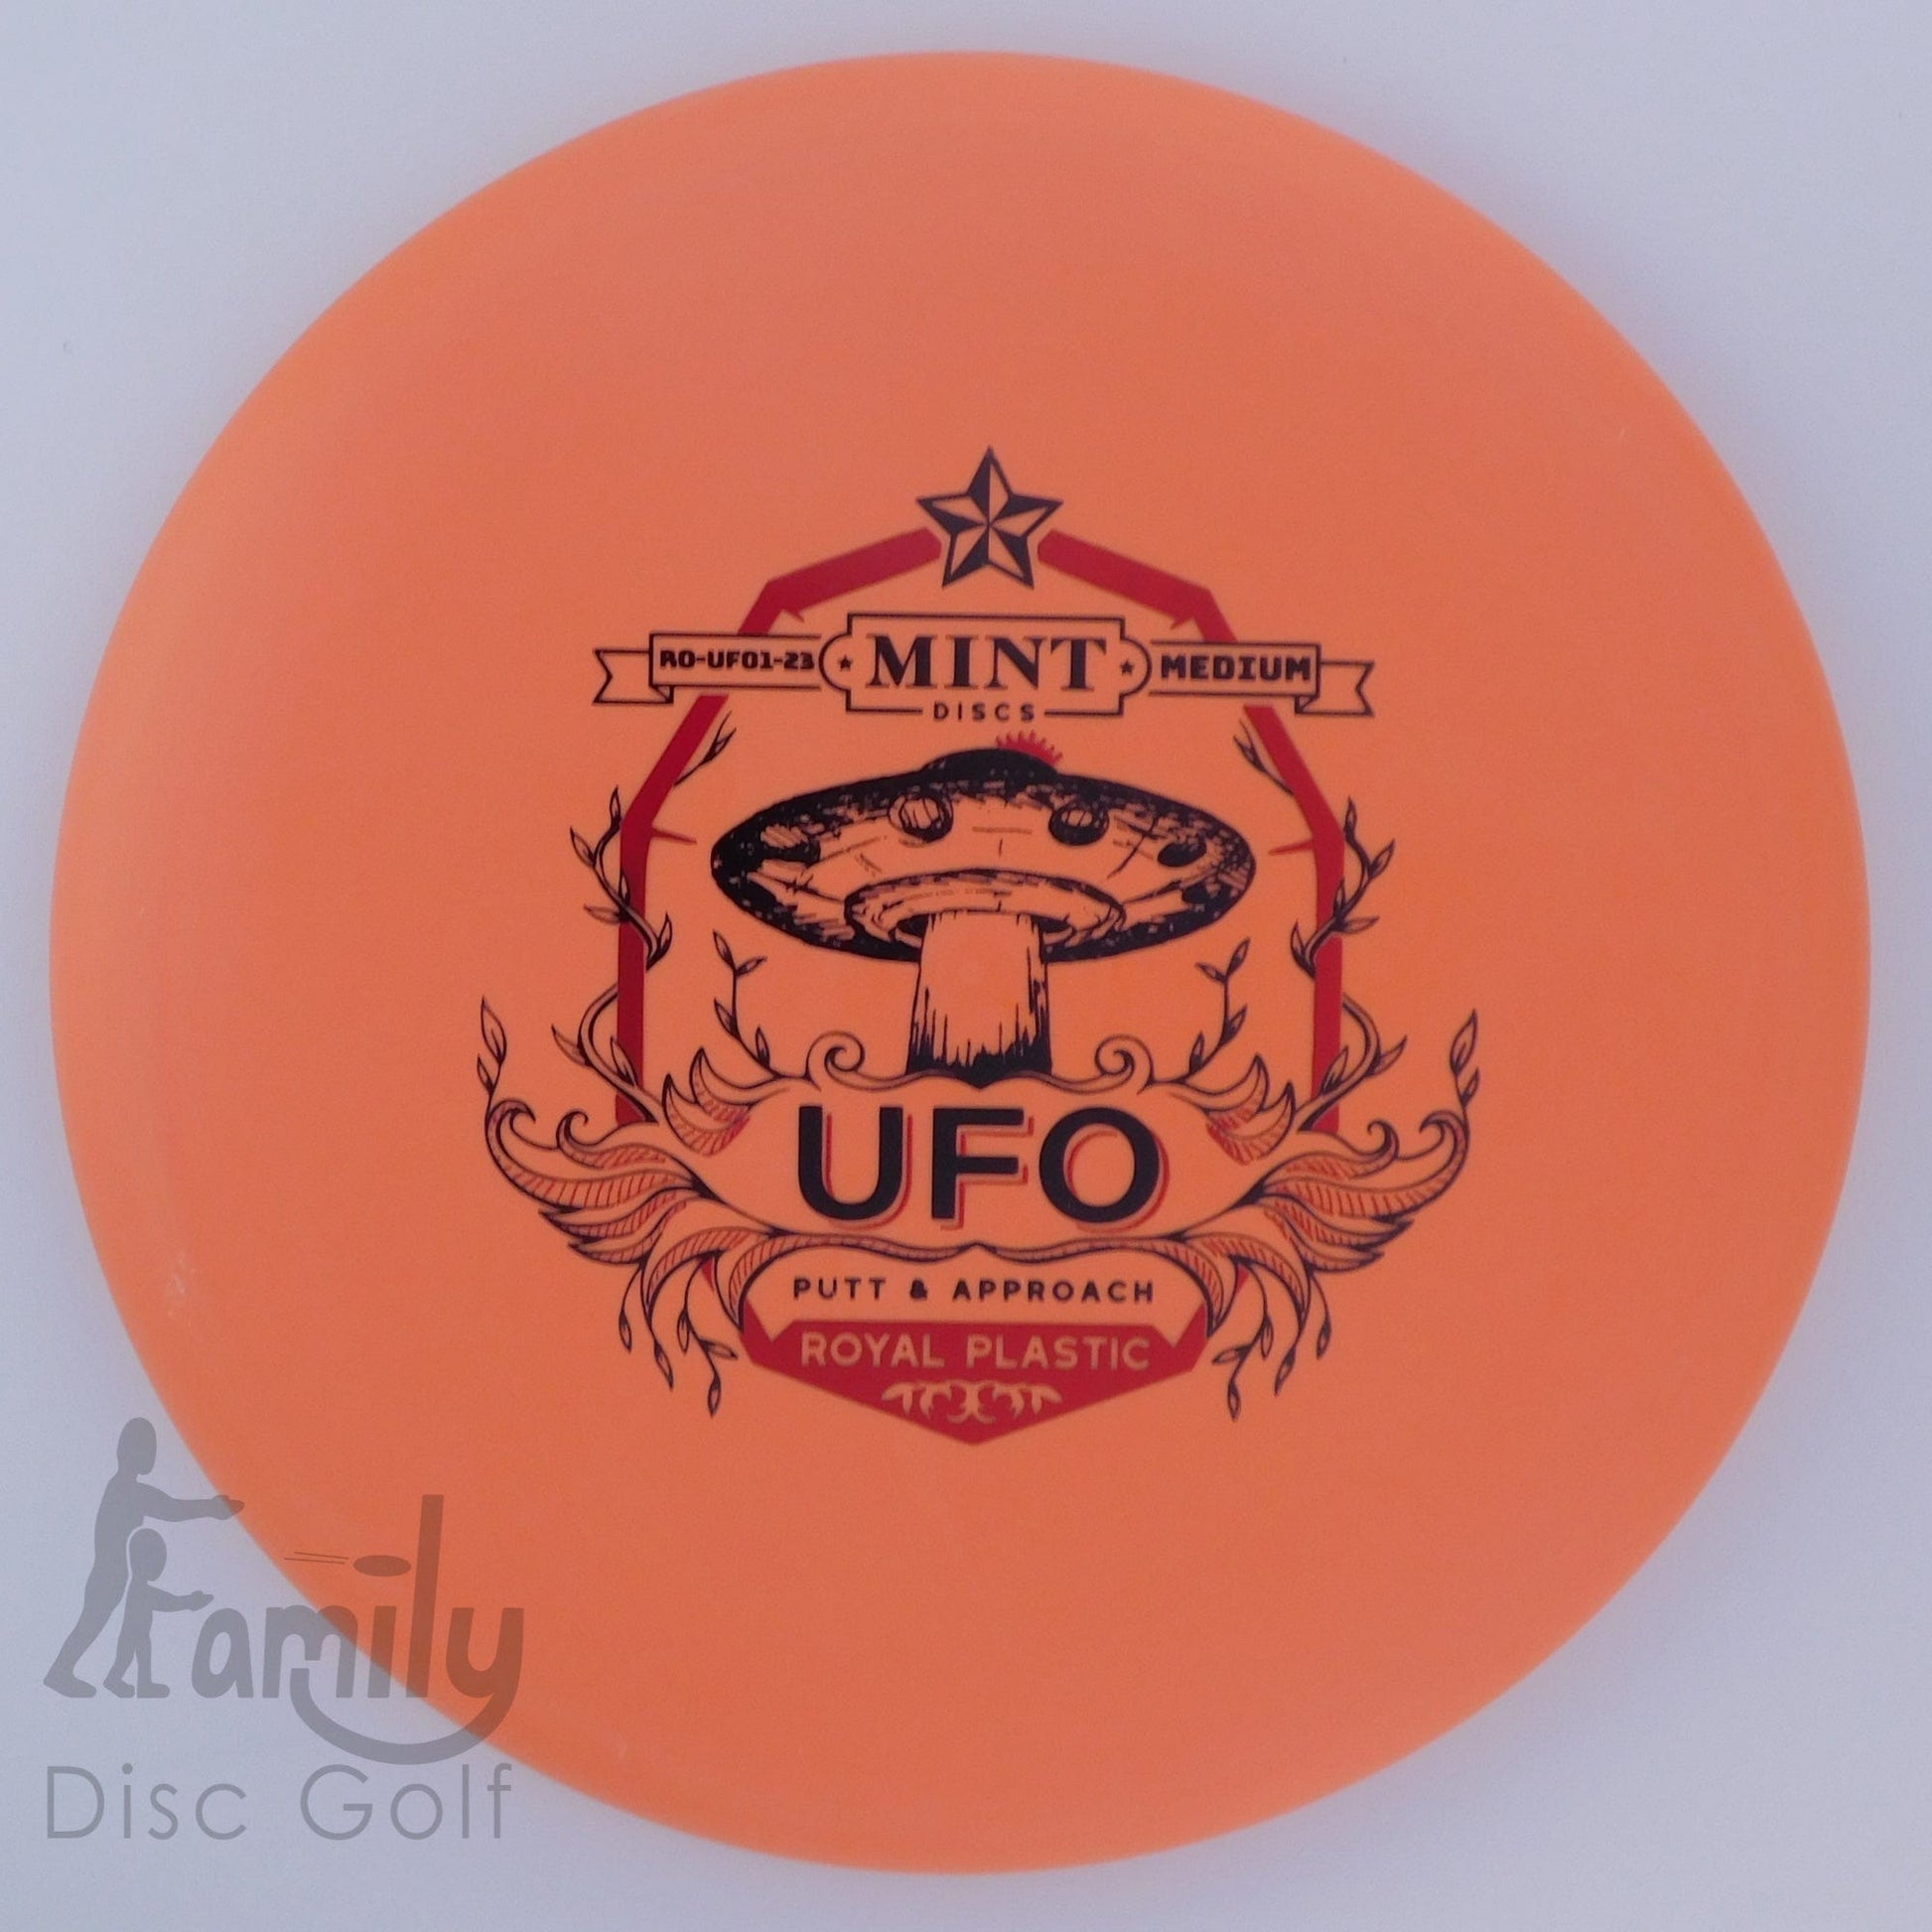 Mint Discs UFO - Royal (Medium) 2│3│0│1 174.3g - Orange - Mint Discs UFO - Royal - 101556